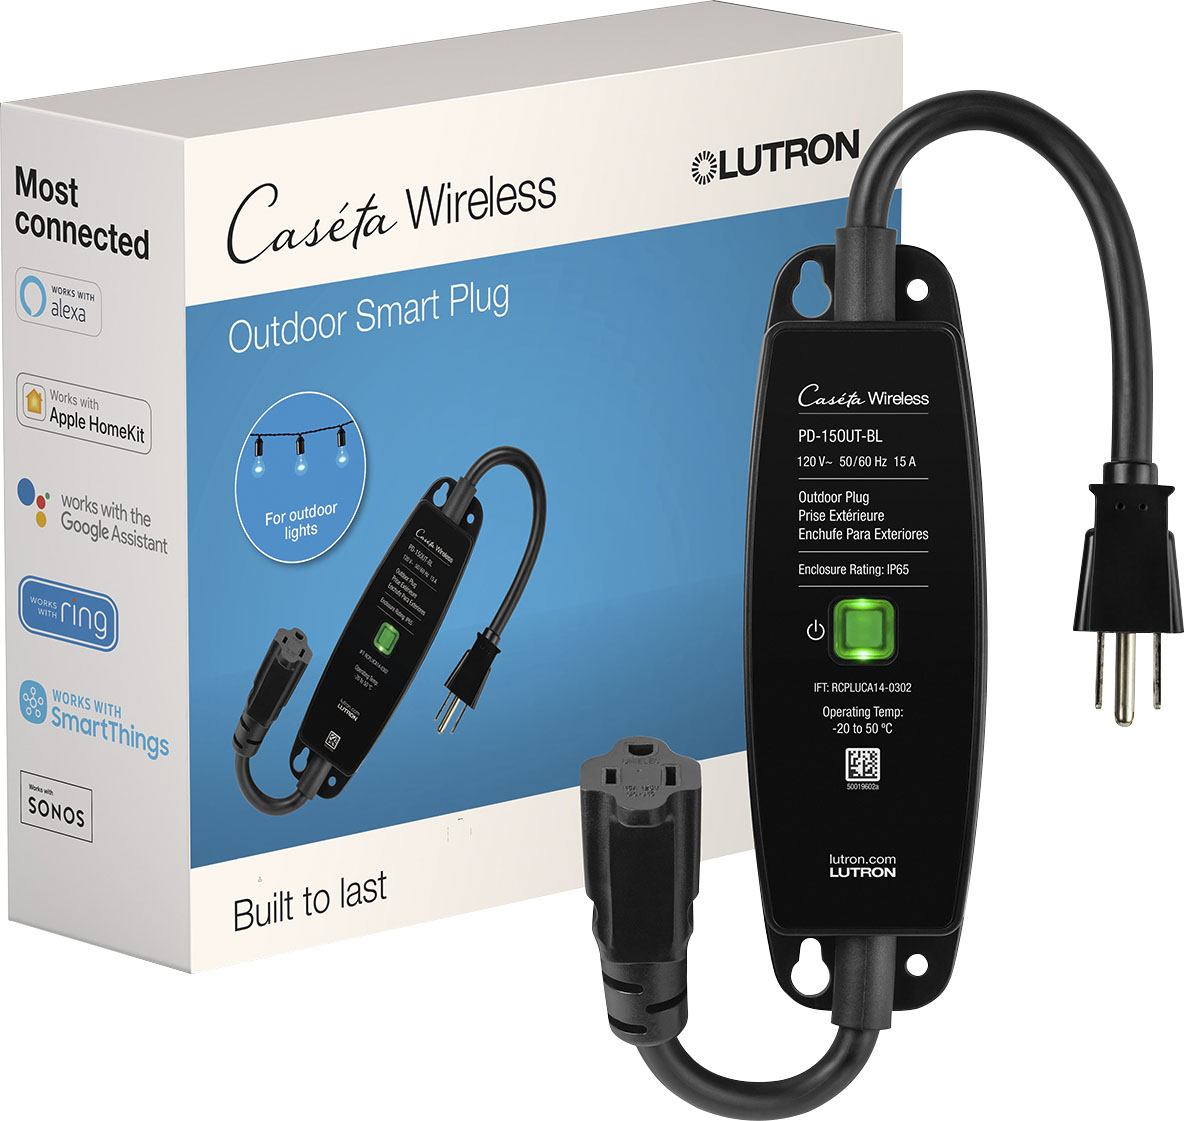 Lutron - Caseta Weatherproof+ Outdoor Smart Plug for Landscape and String Lighting, On/Off Switch - Black